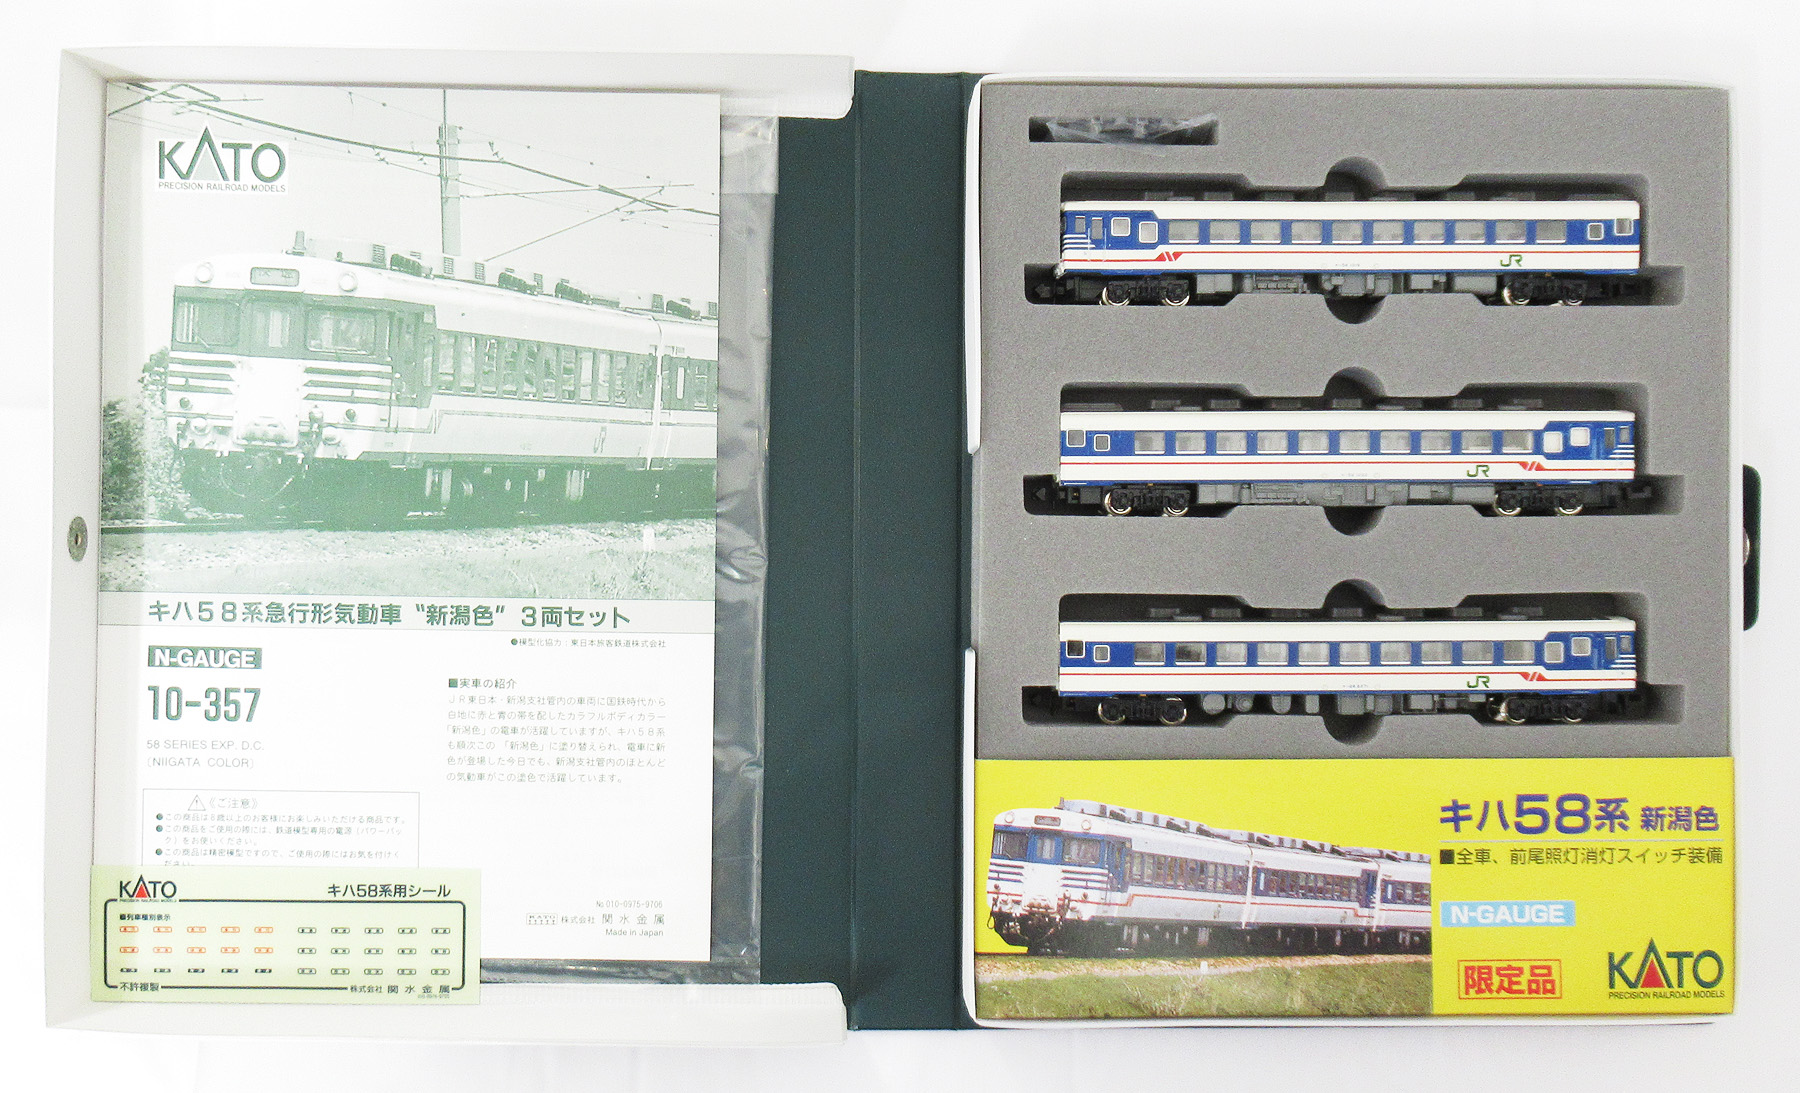 公式]鉄道模型(10-357キハ58系急行形気動車(新潟色) 3両セット)商品